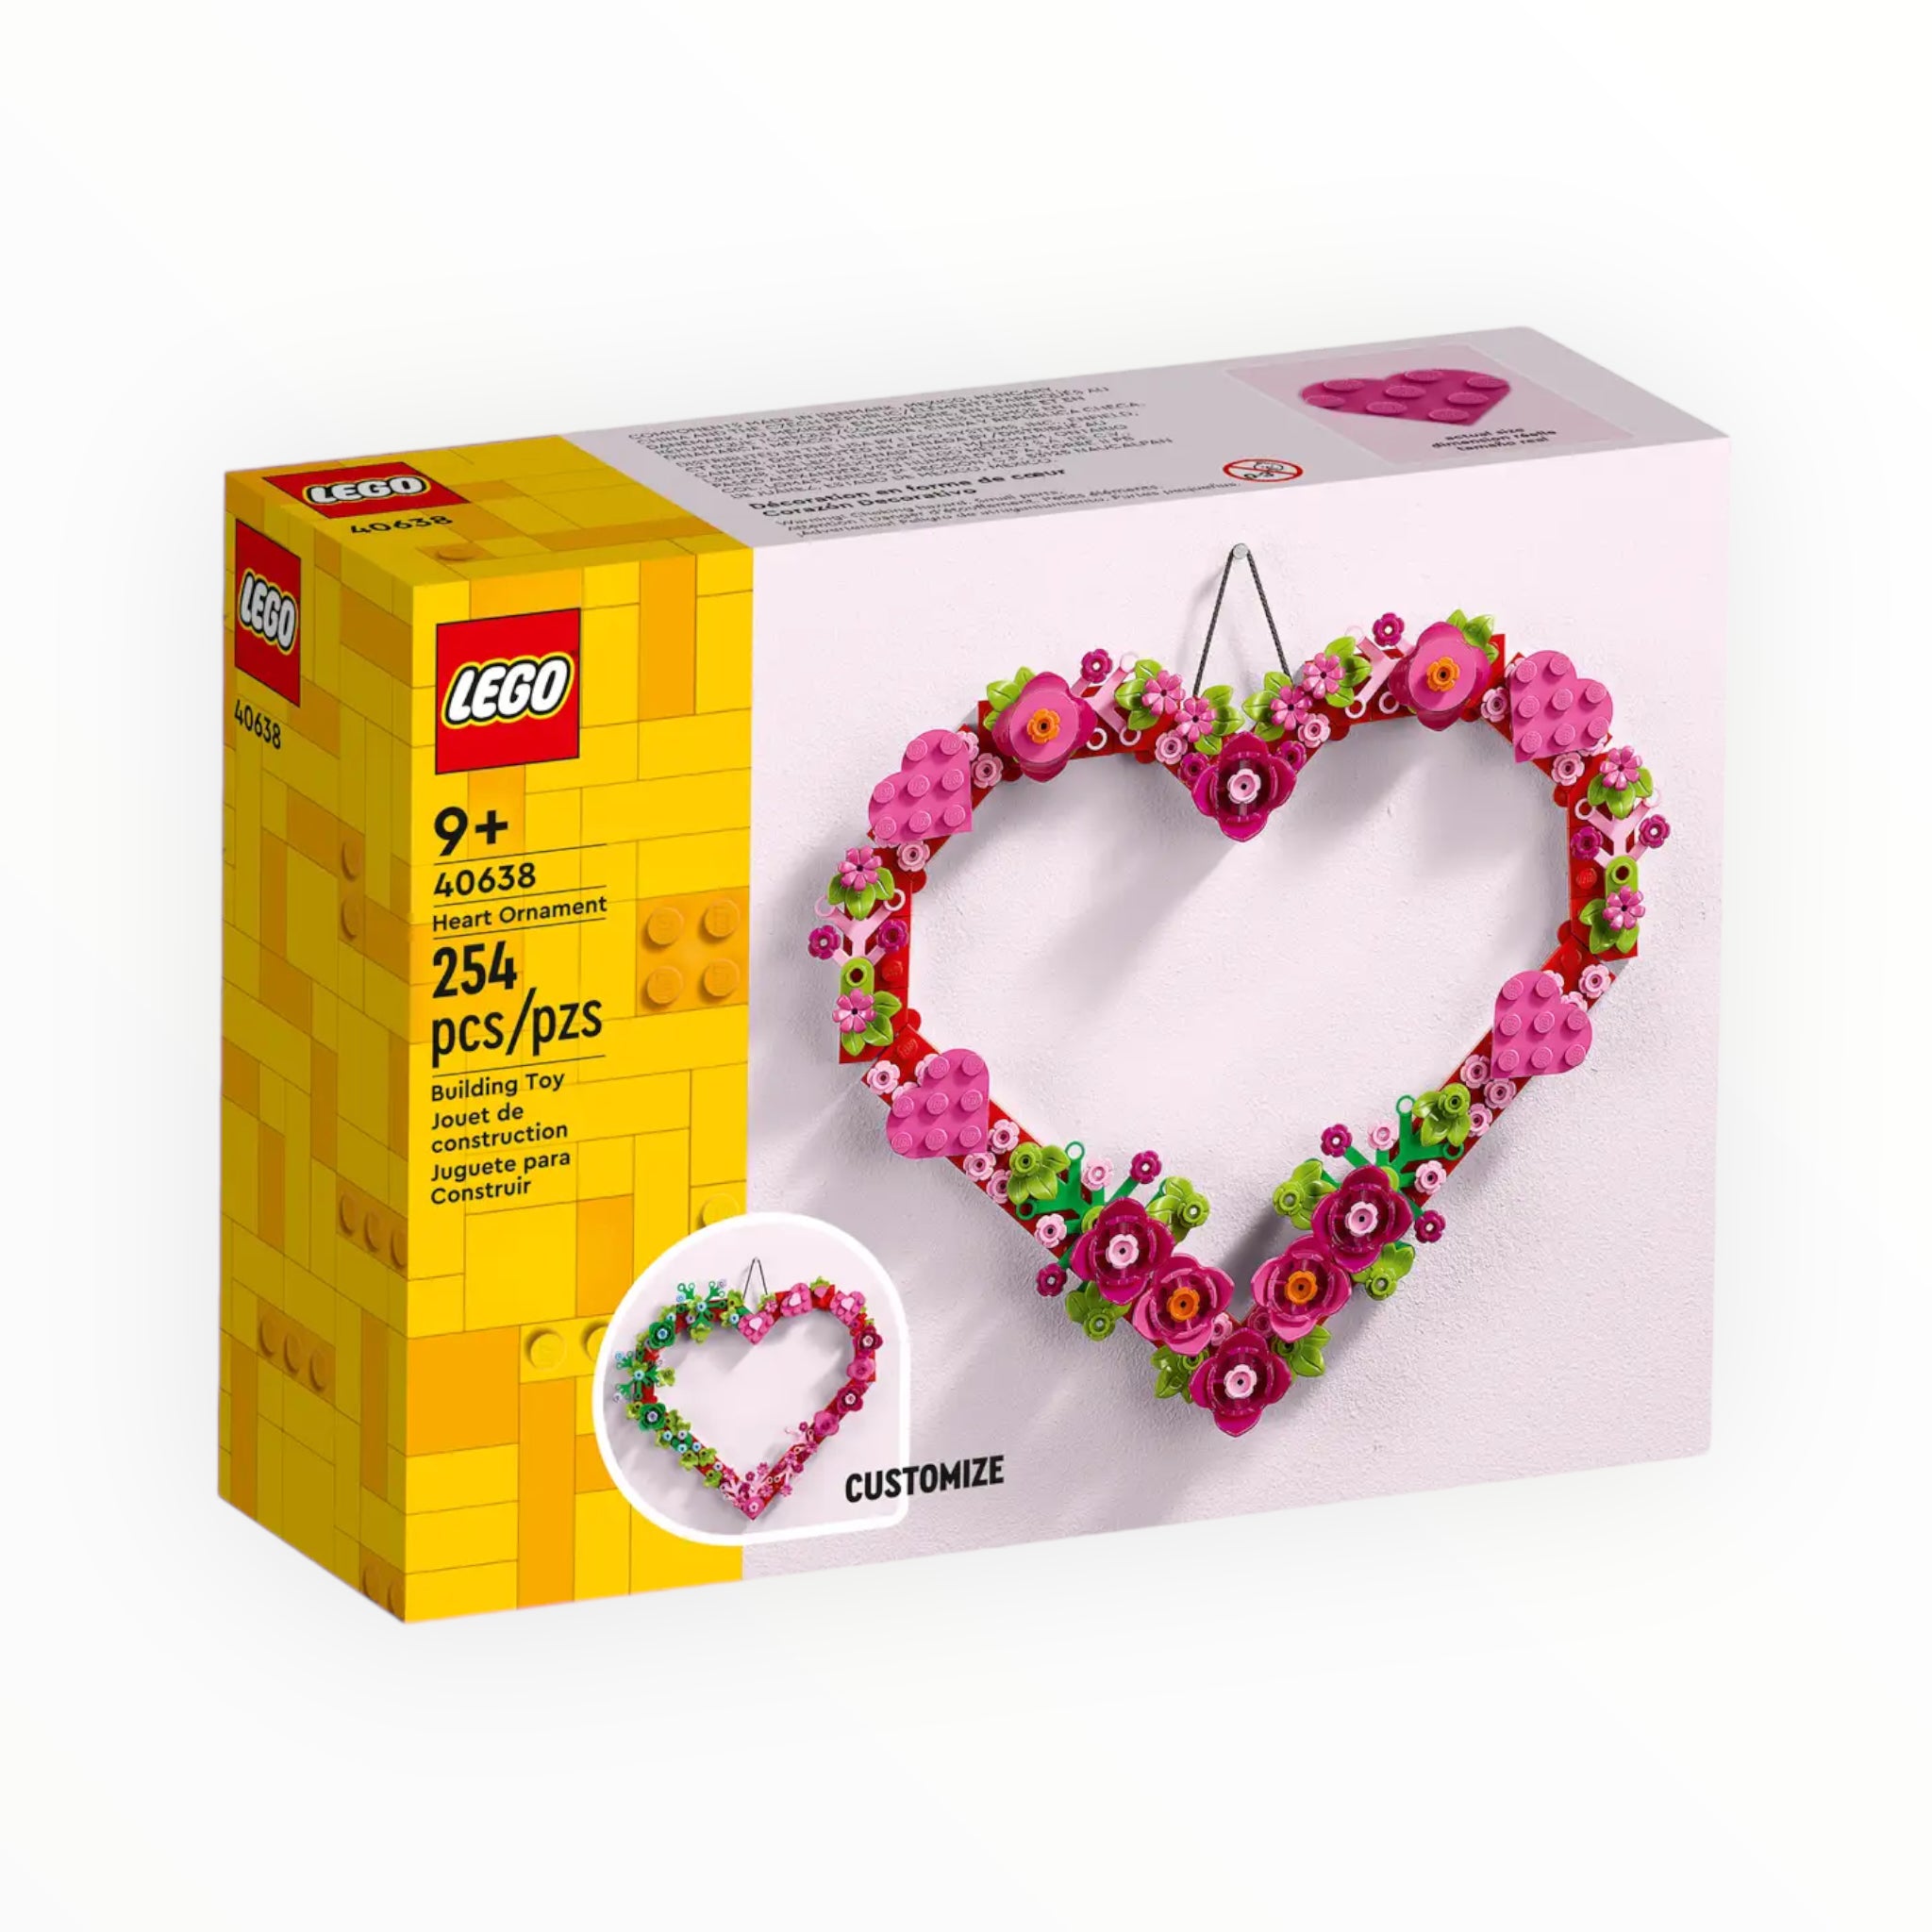 40638 LEGO Heart Ornament